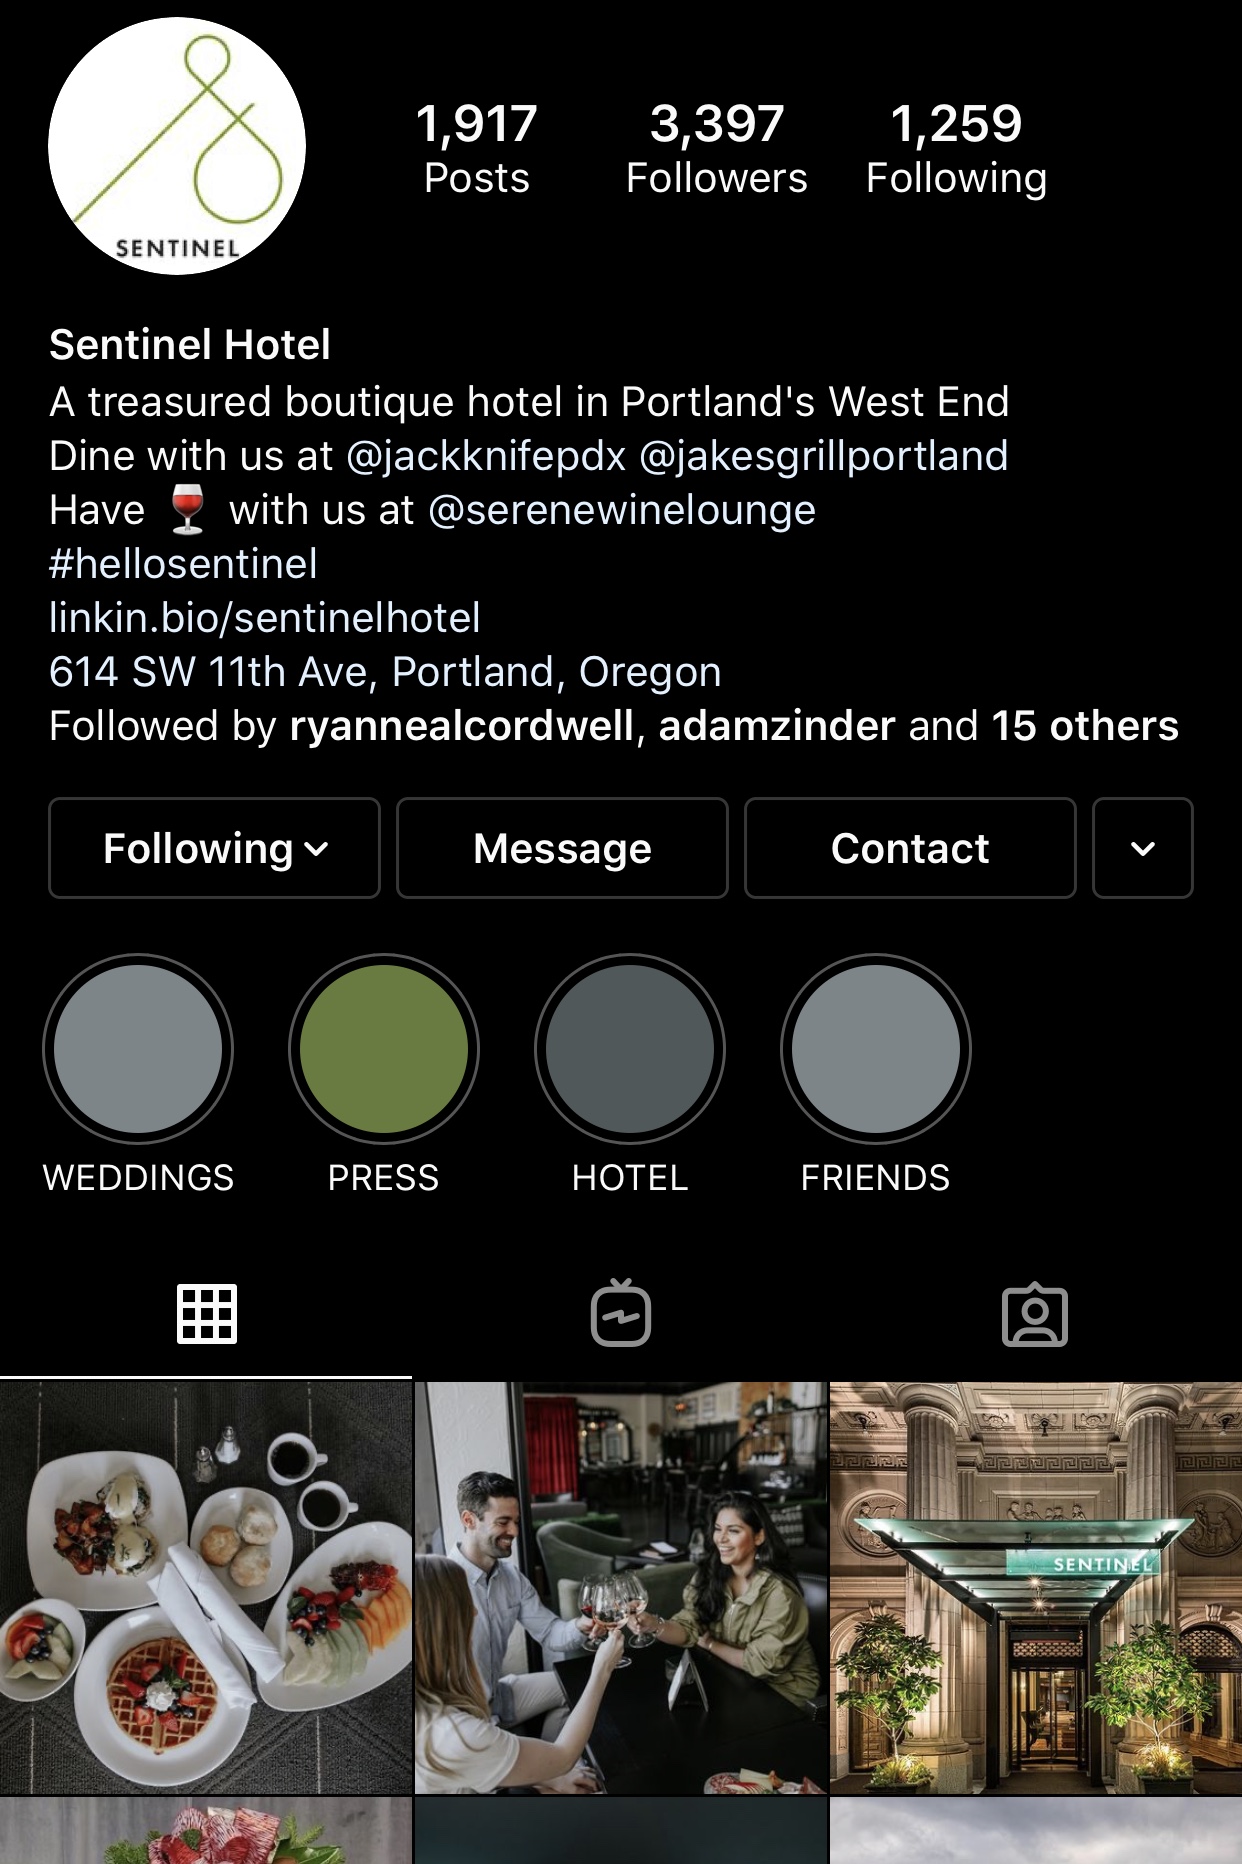 Erika Lily Castro_Campaign_Sentinel Hotel_Instagram_Photoshoot 4